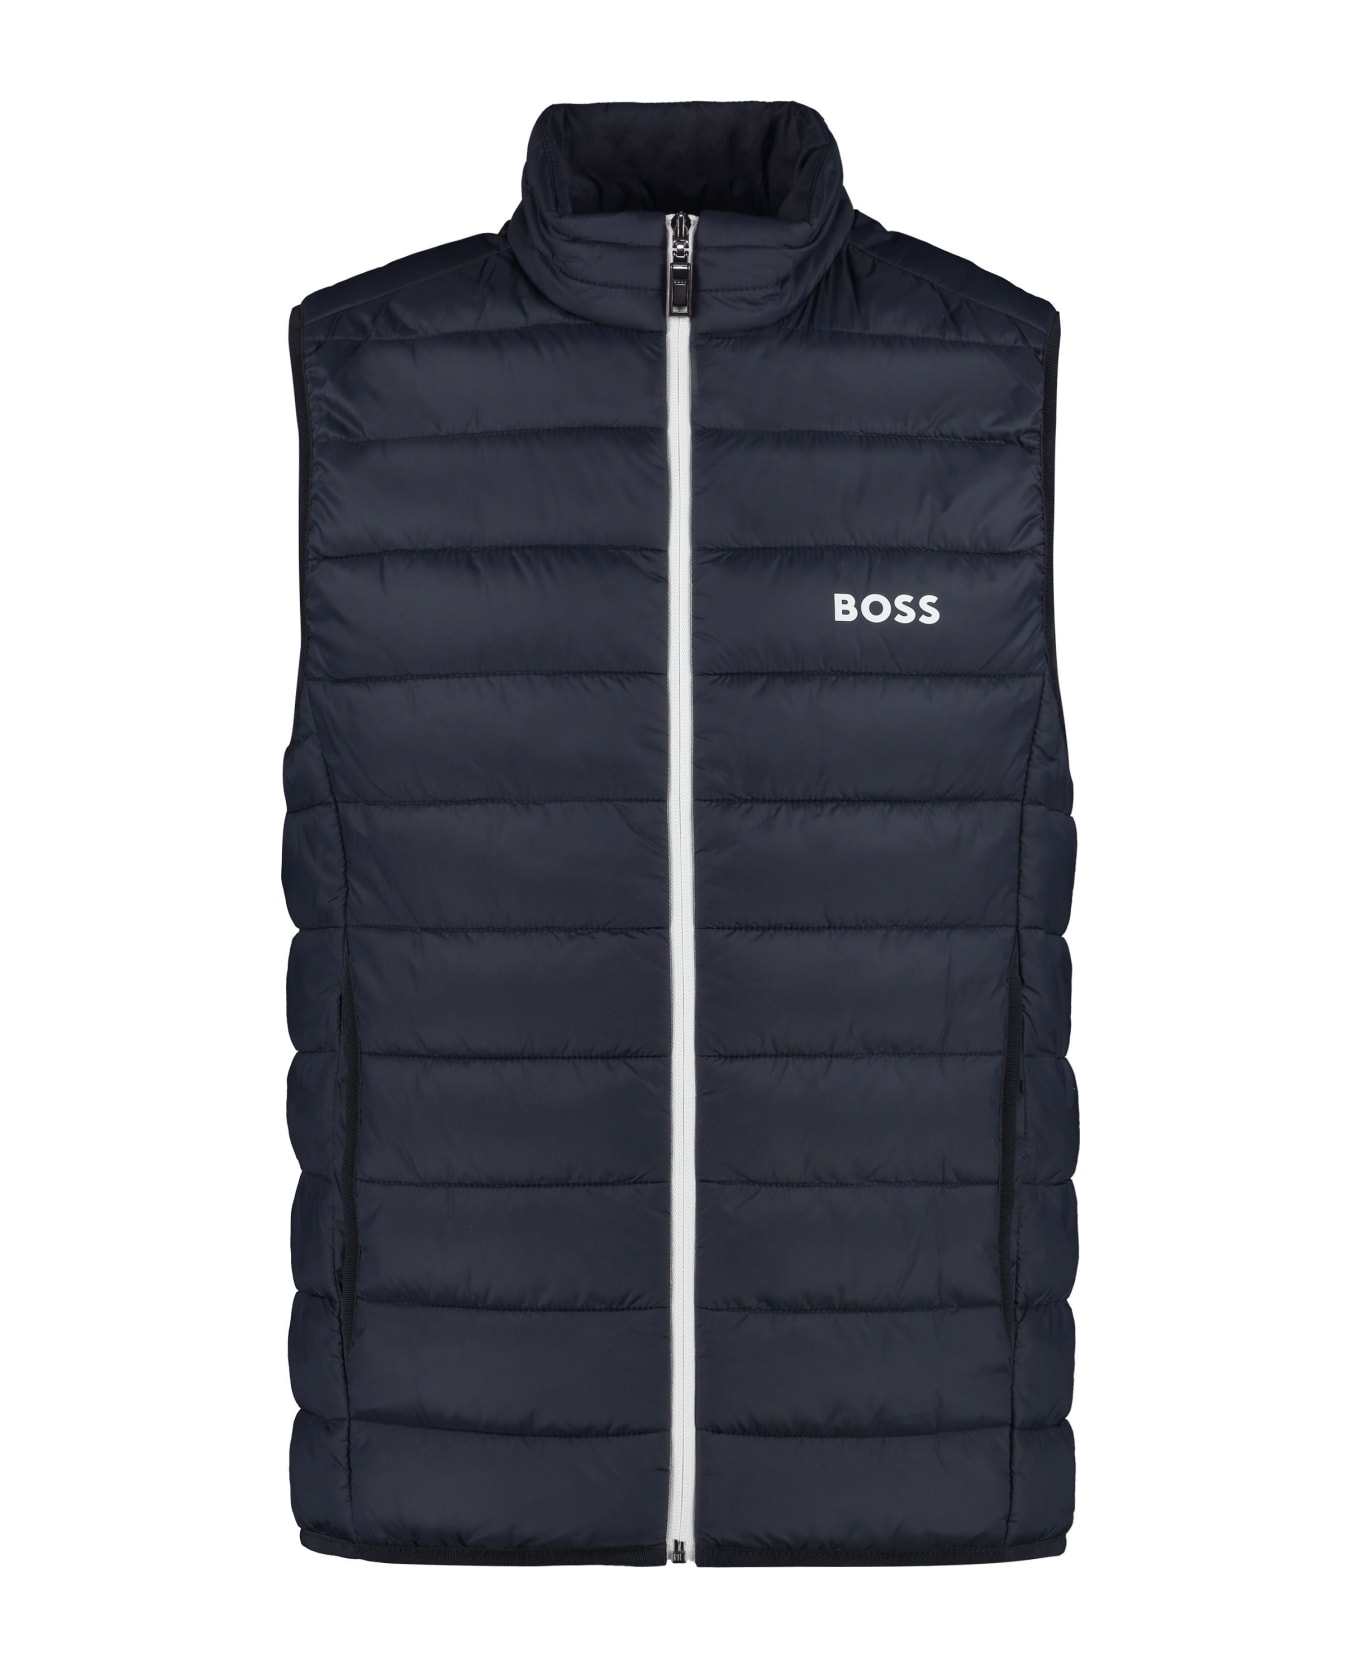 Hugo Boss Bodywarmer Jacket - BLUE